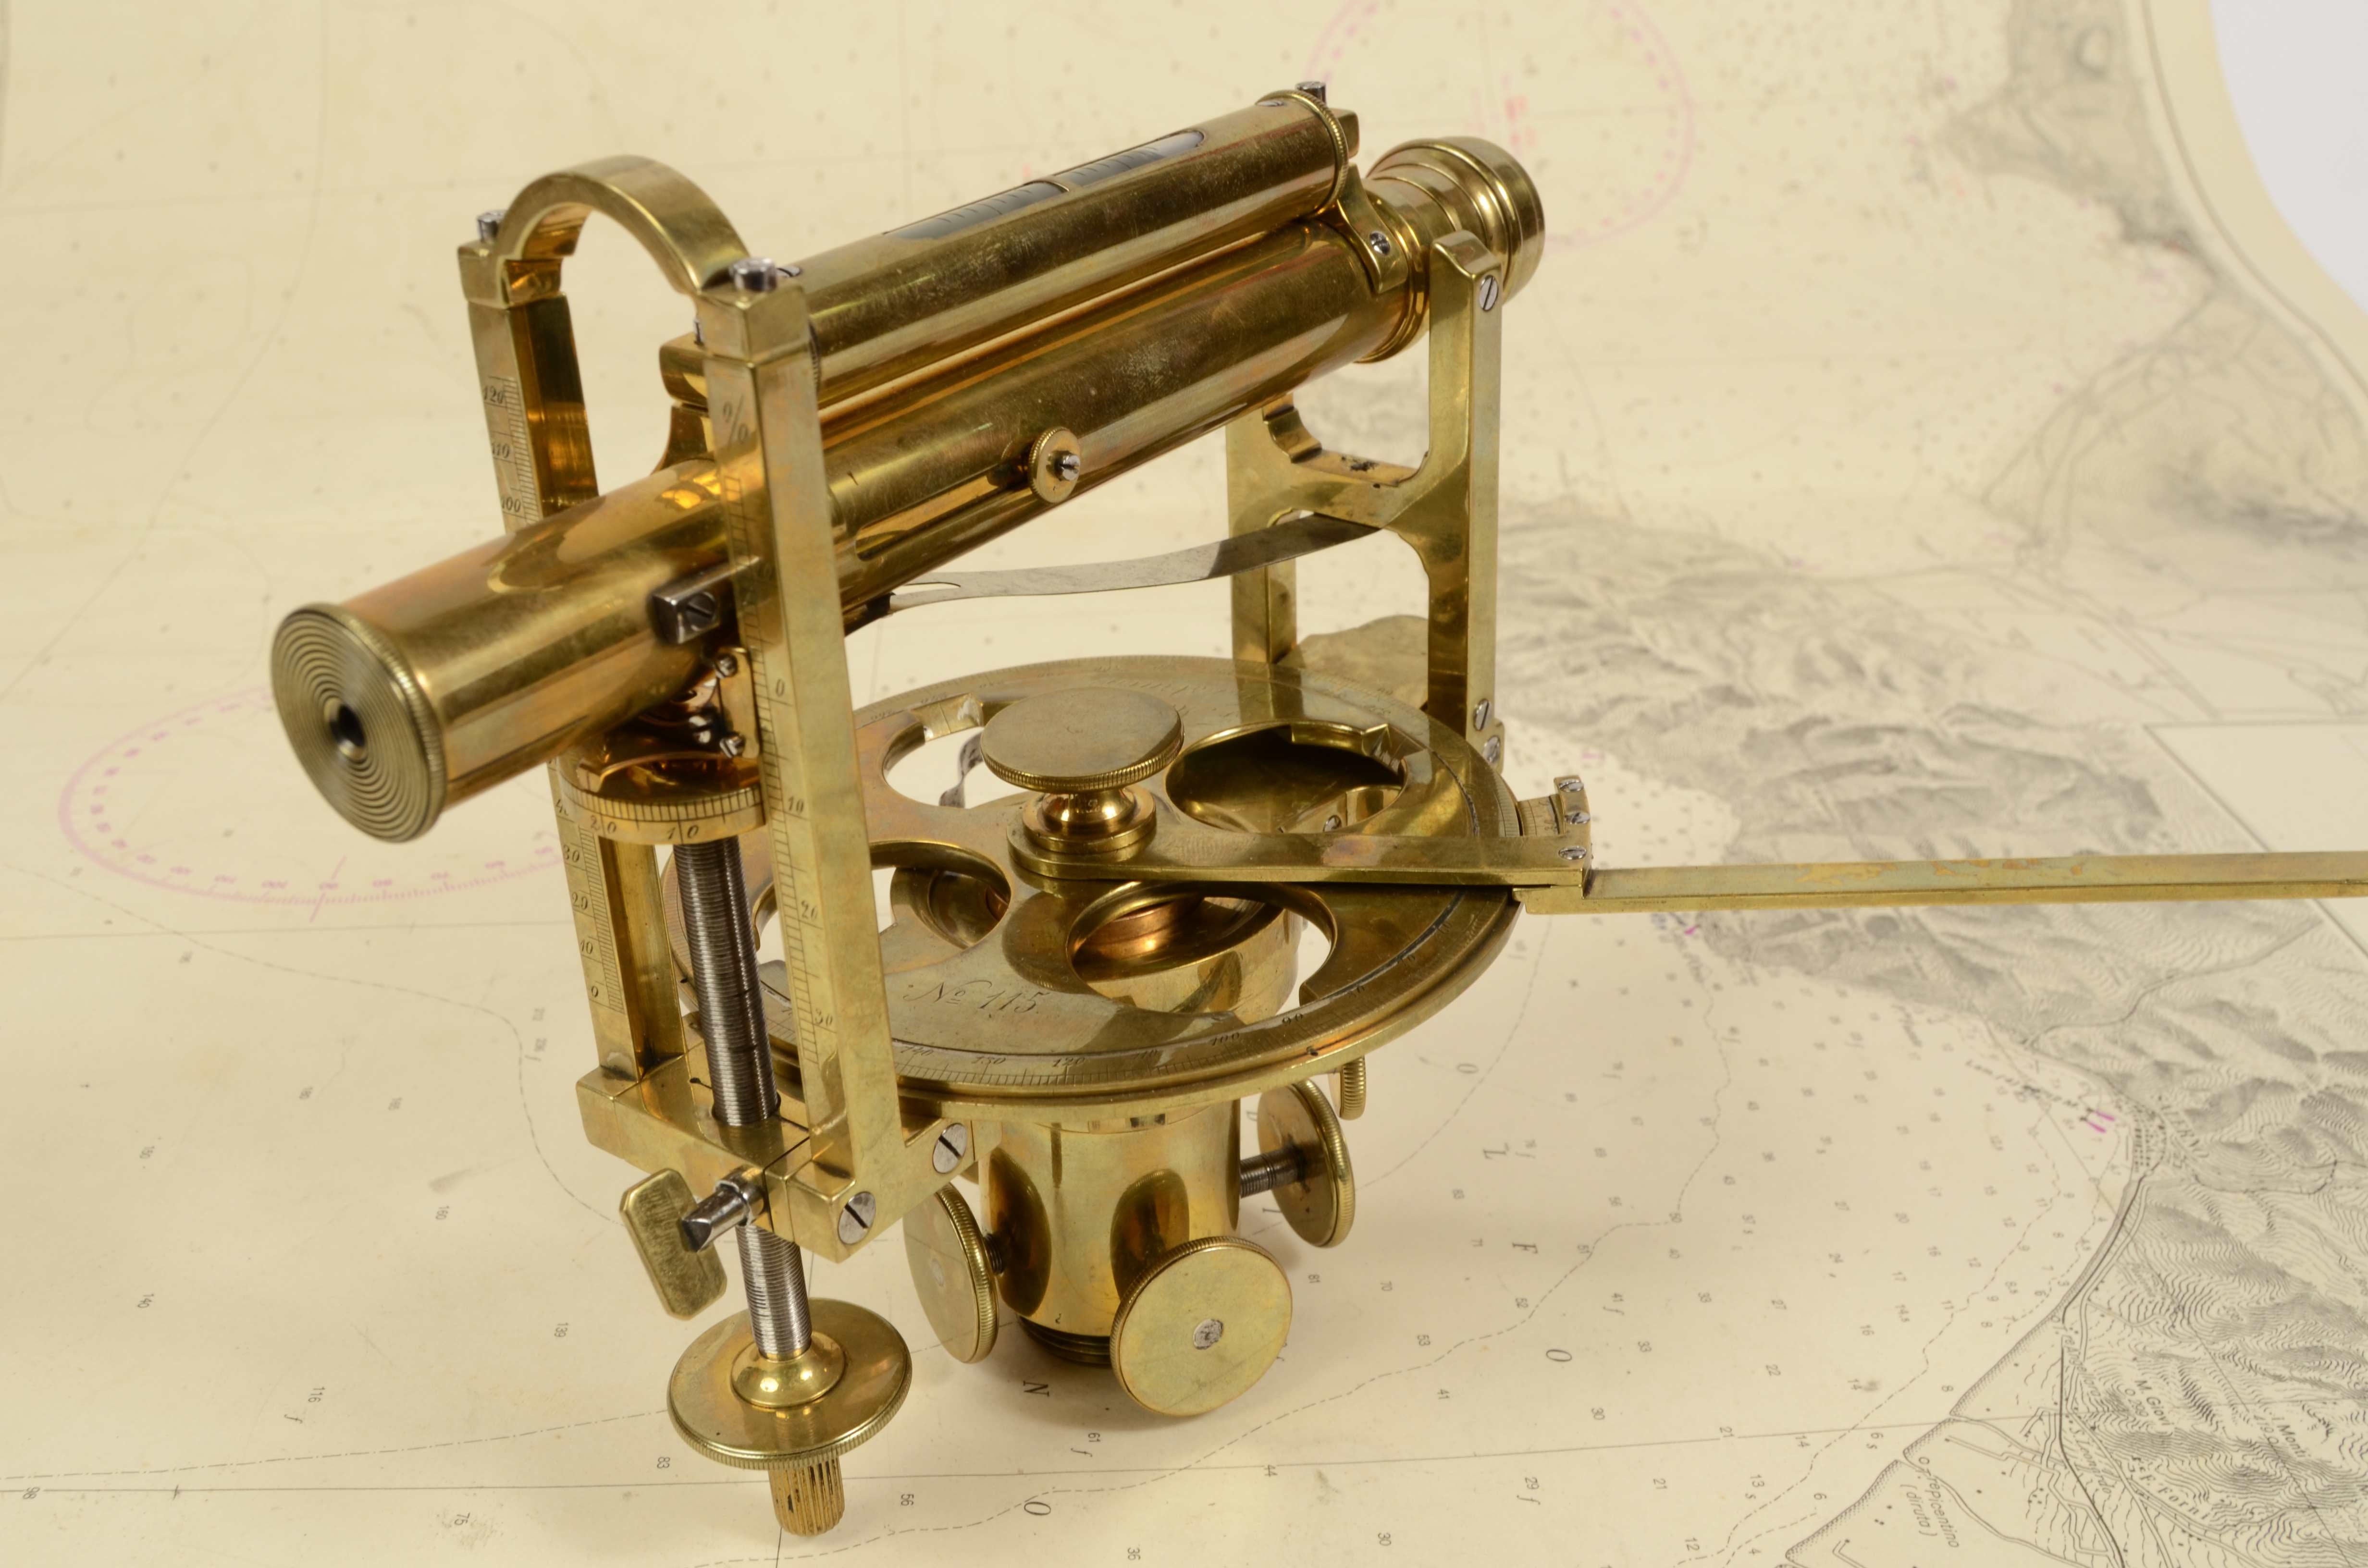 1870s Brass Clisigonimeter F. Miller Innsbruck Surveyor Measurement Instrumemt 2